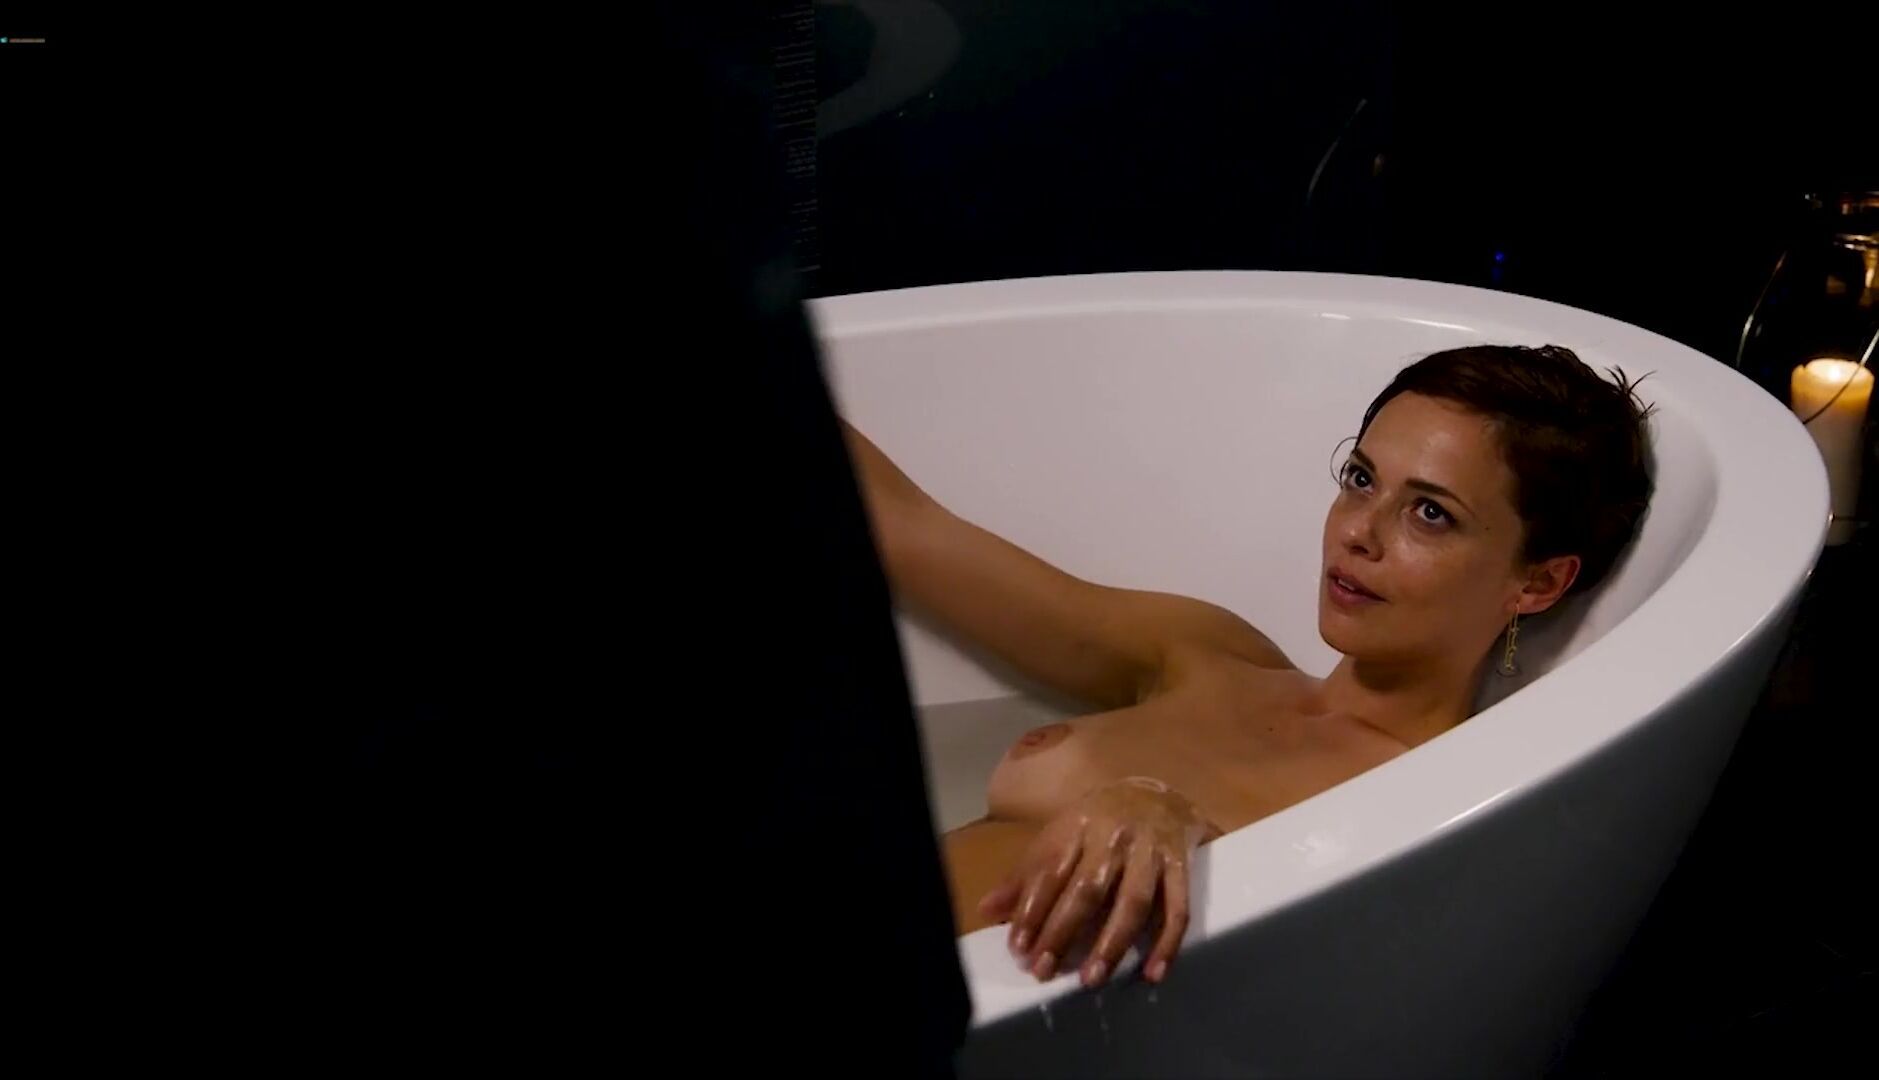 Naija Hot MILF Valeria Bilello nude exposes boobs and hairy muff in TV series Sense 8 CastingCouch-X - 2